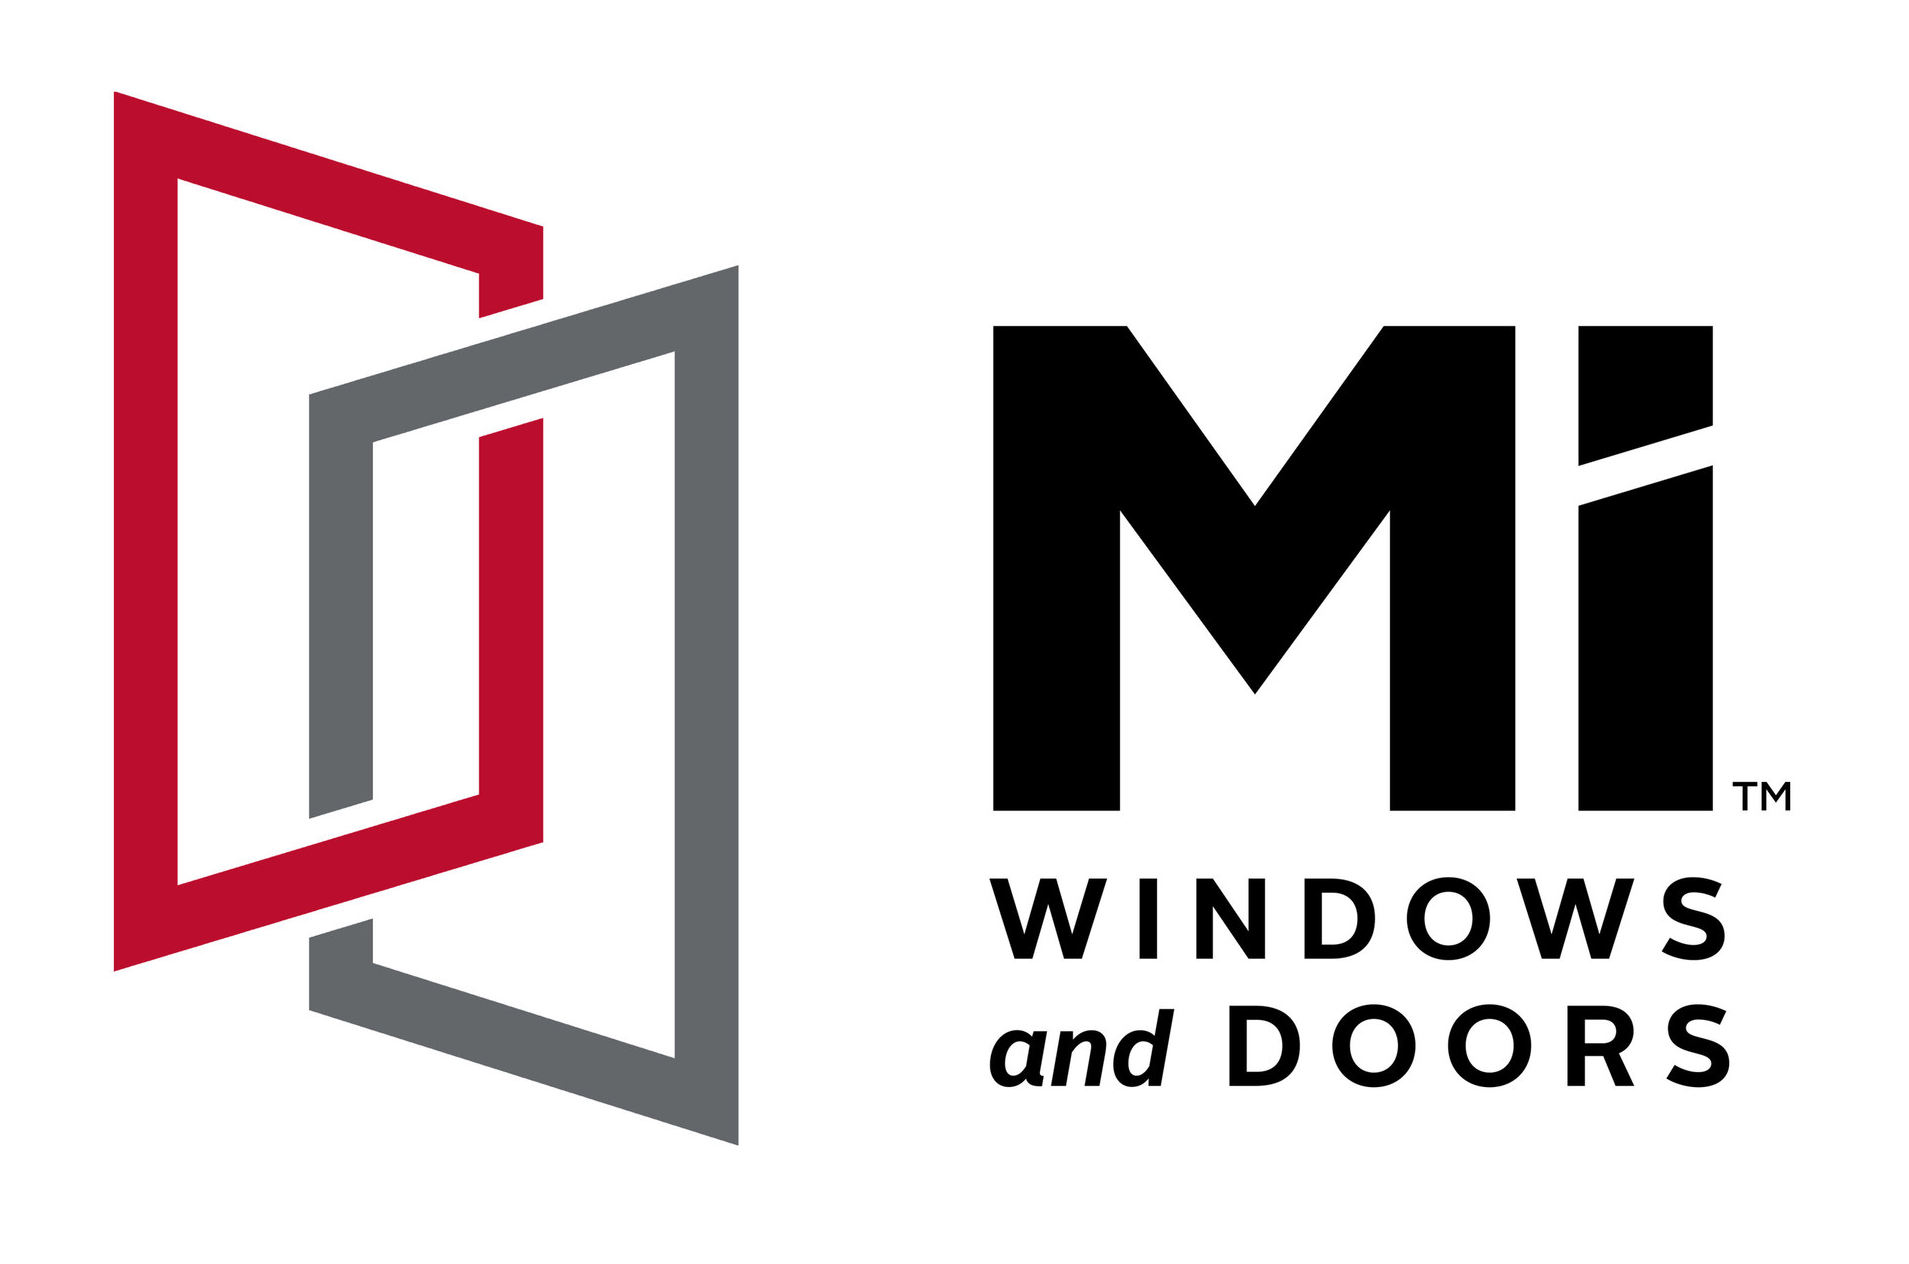 MI Windows and Doors